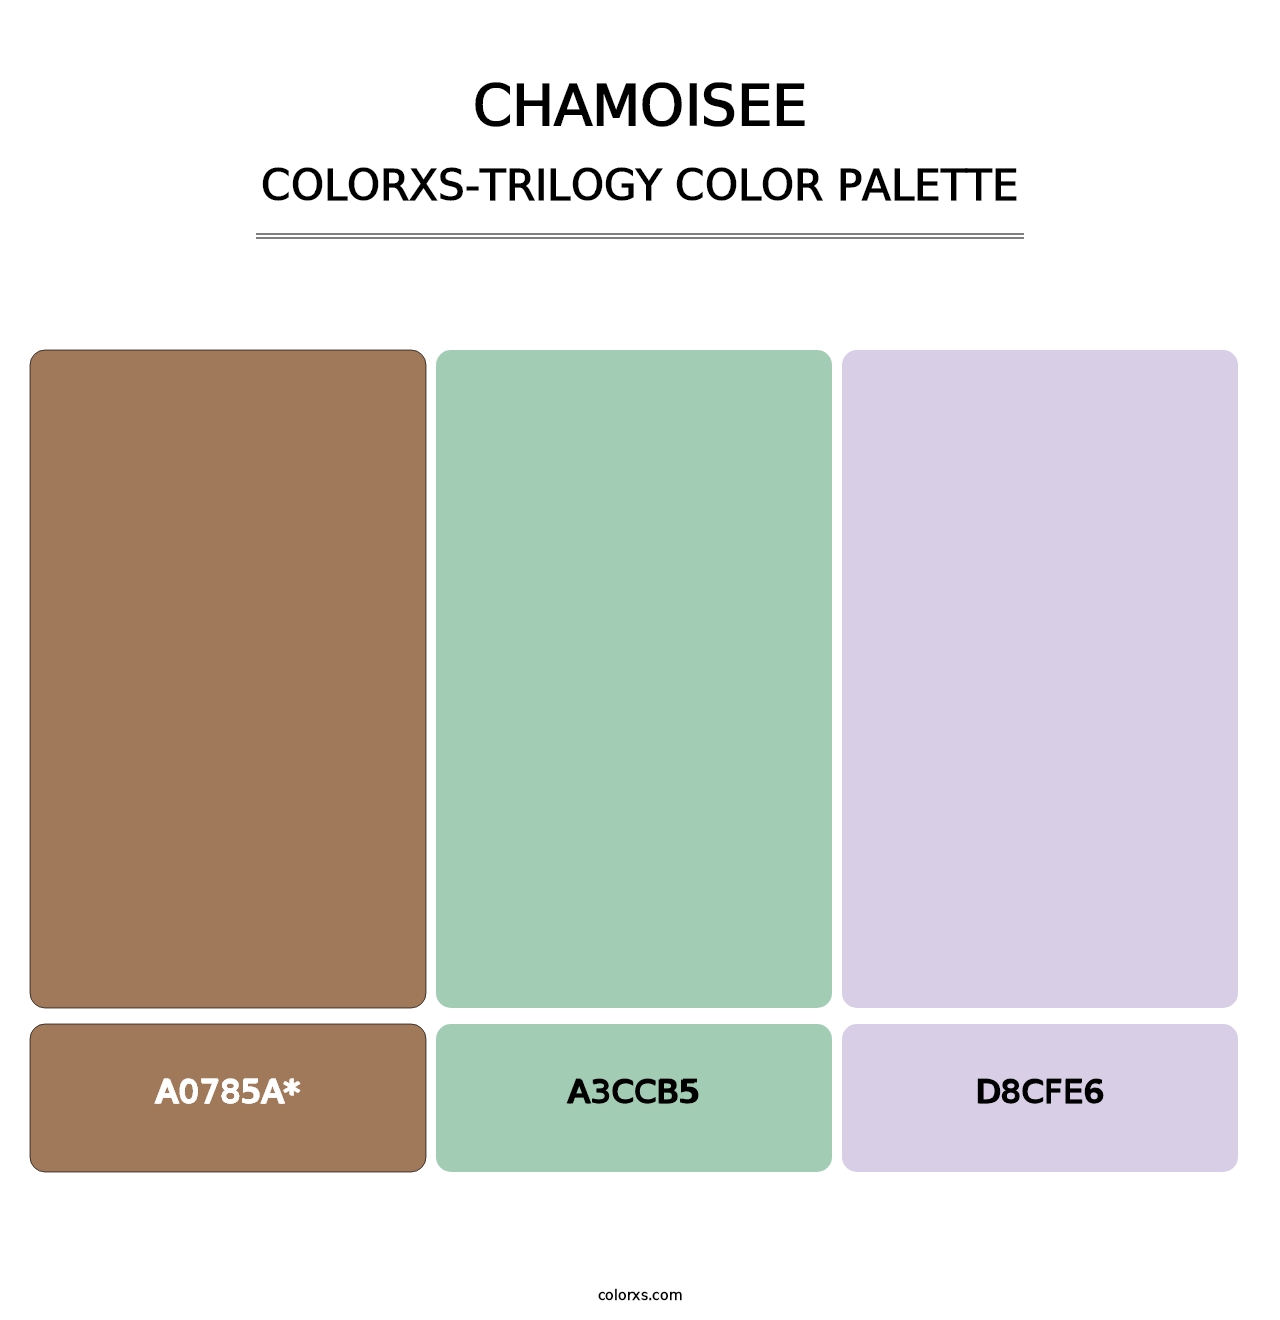 Chamoisee - Colorxs Trilogy Palette